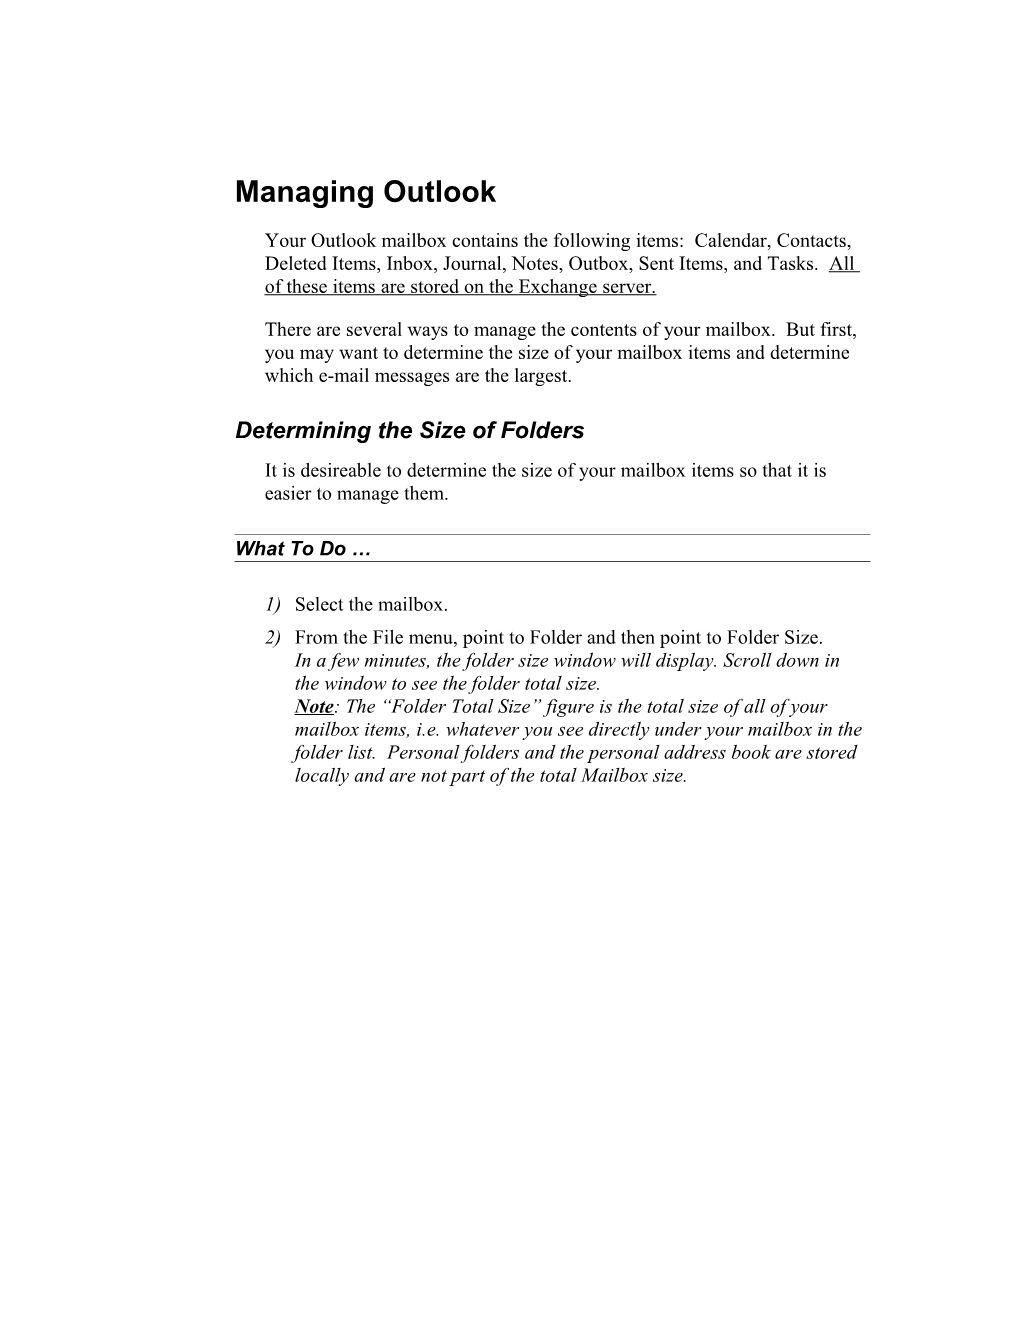 Technical Trainingoutlook 97 Managing Outlook